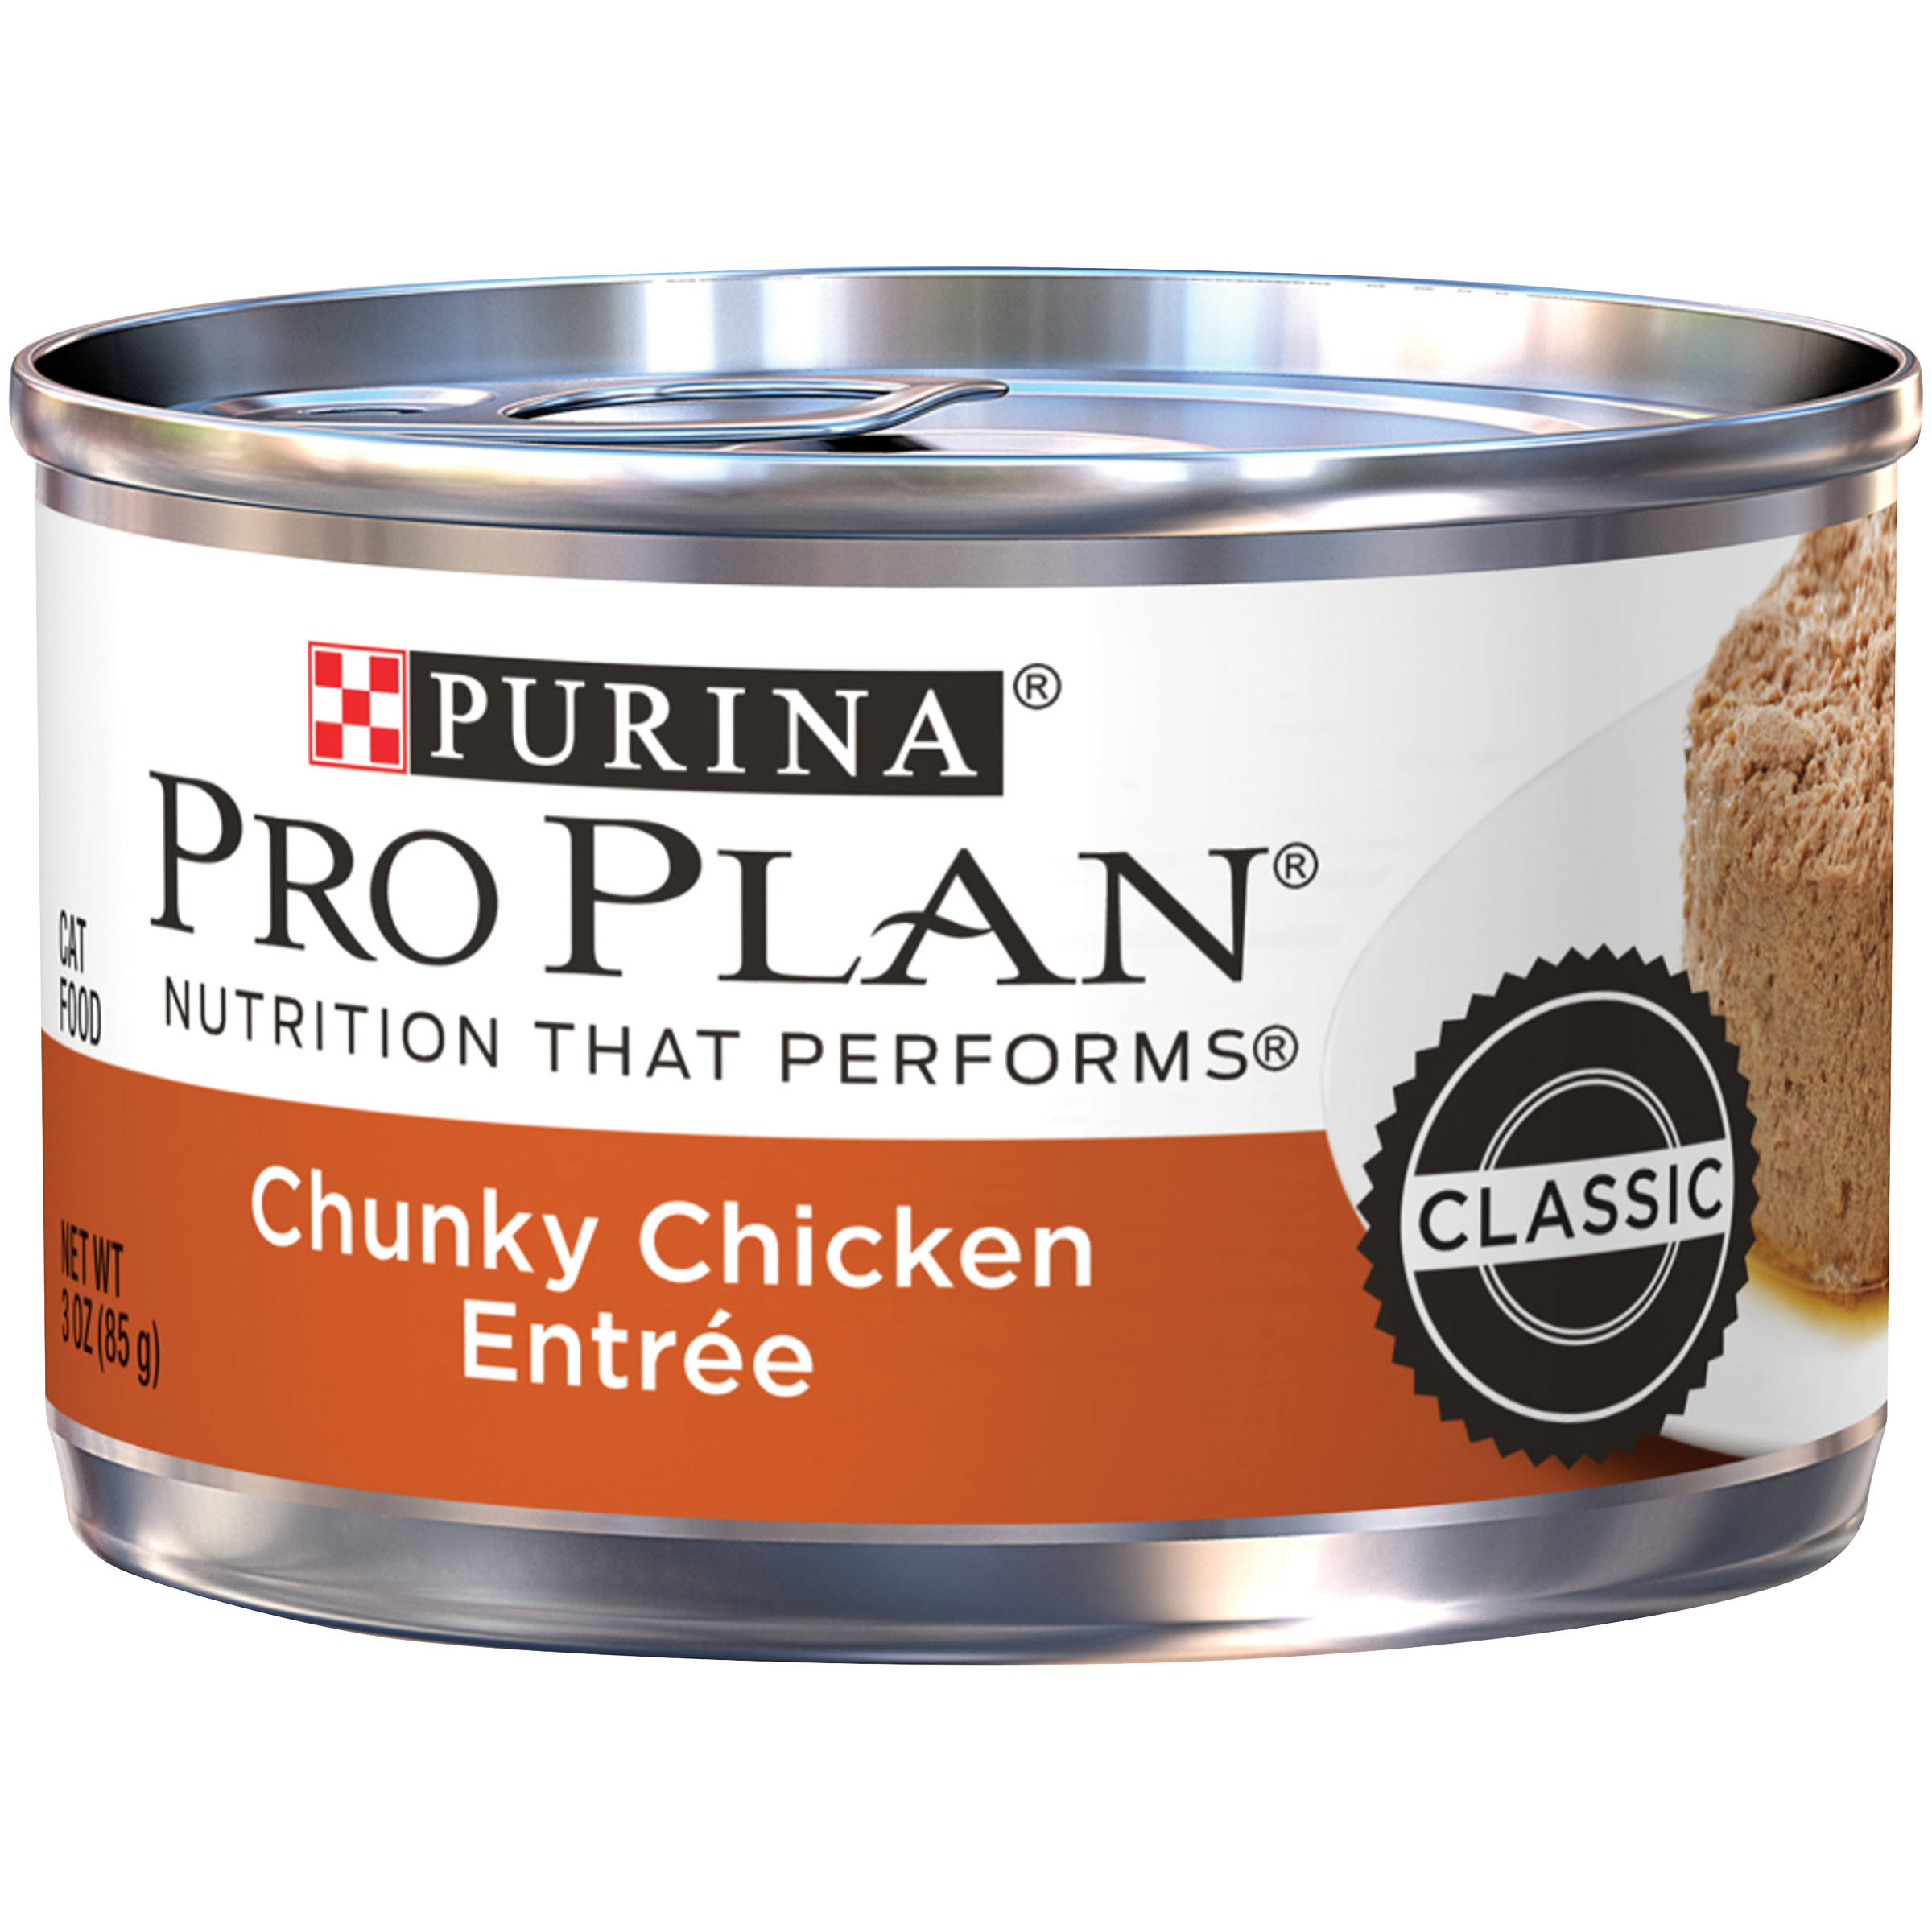 Purina Pro Plan Cat Food - Chicken Entree, Adult, 3oz